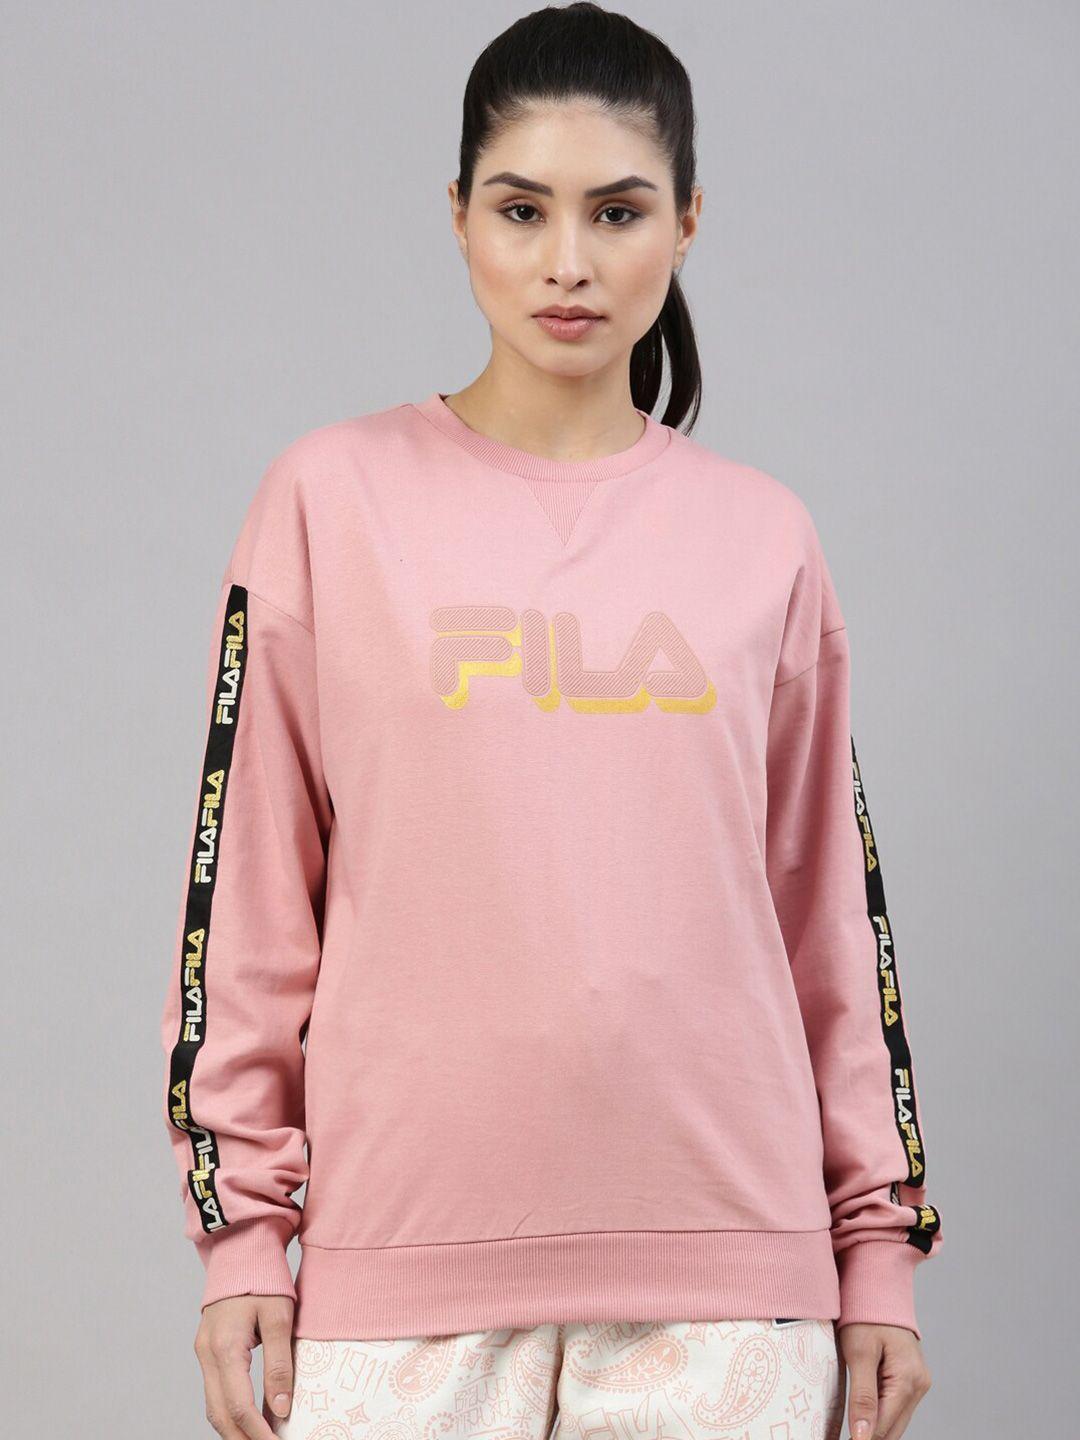 fila women pink printed sweatshirt